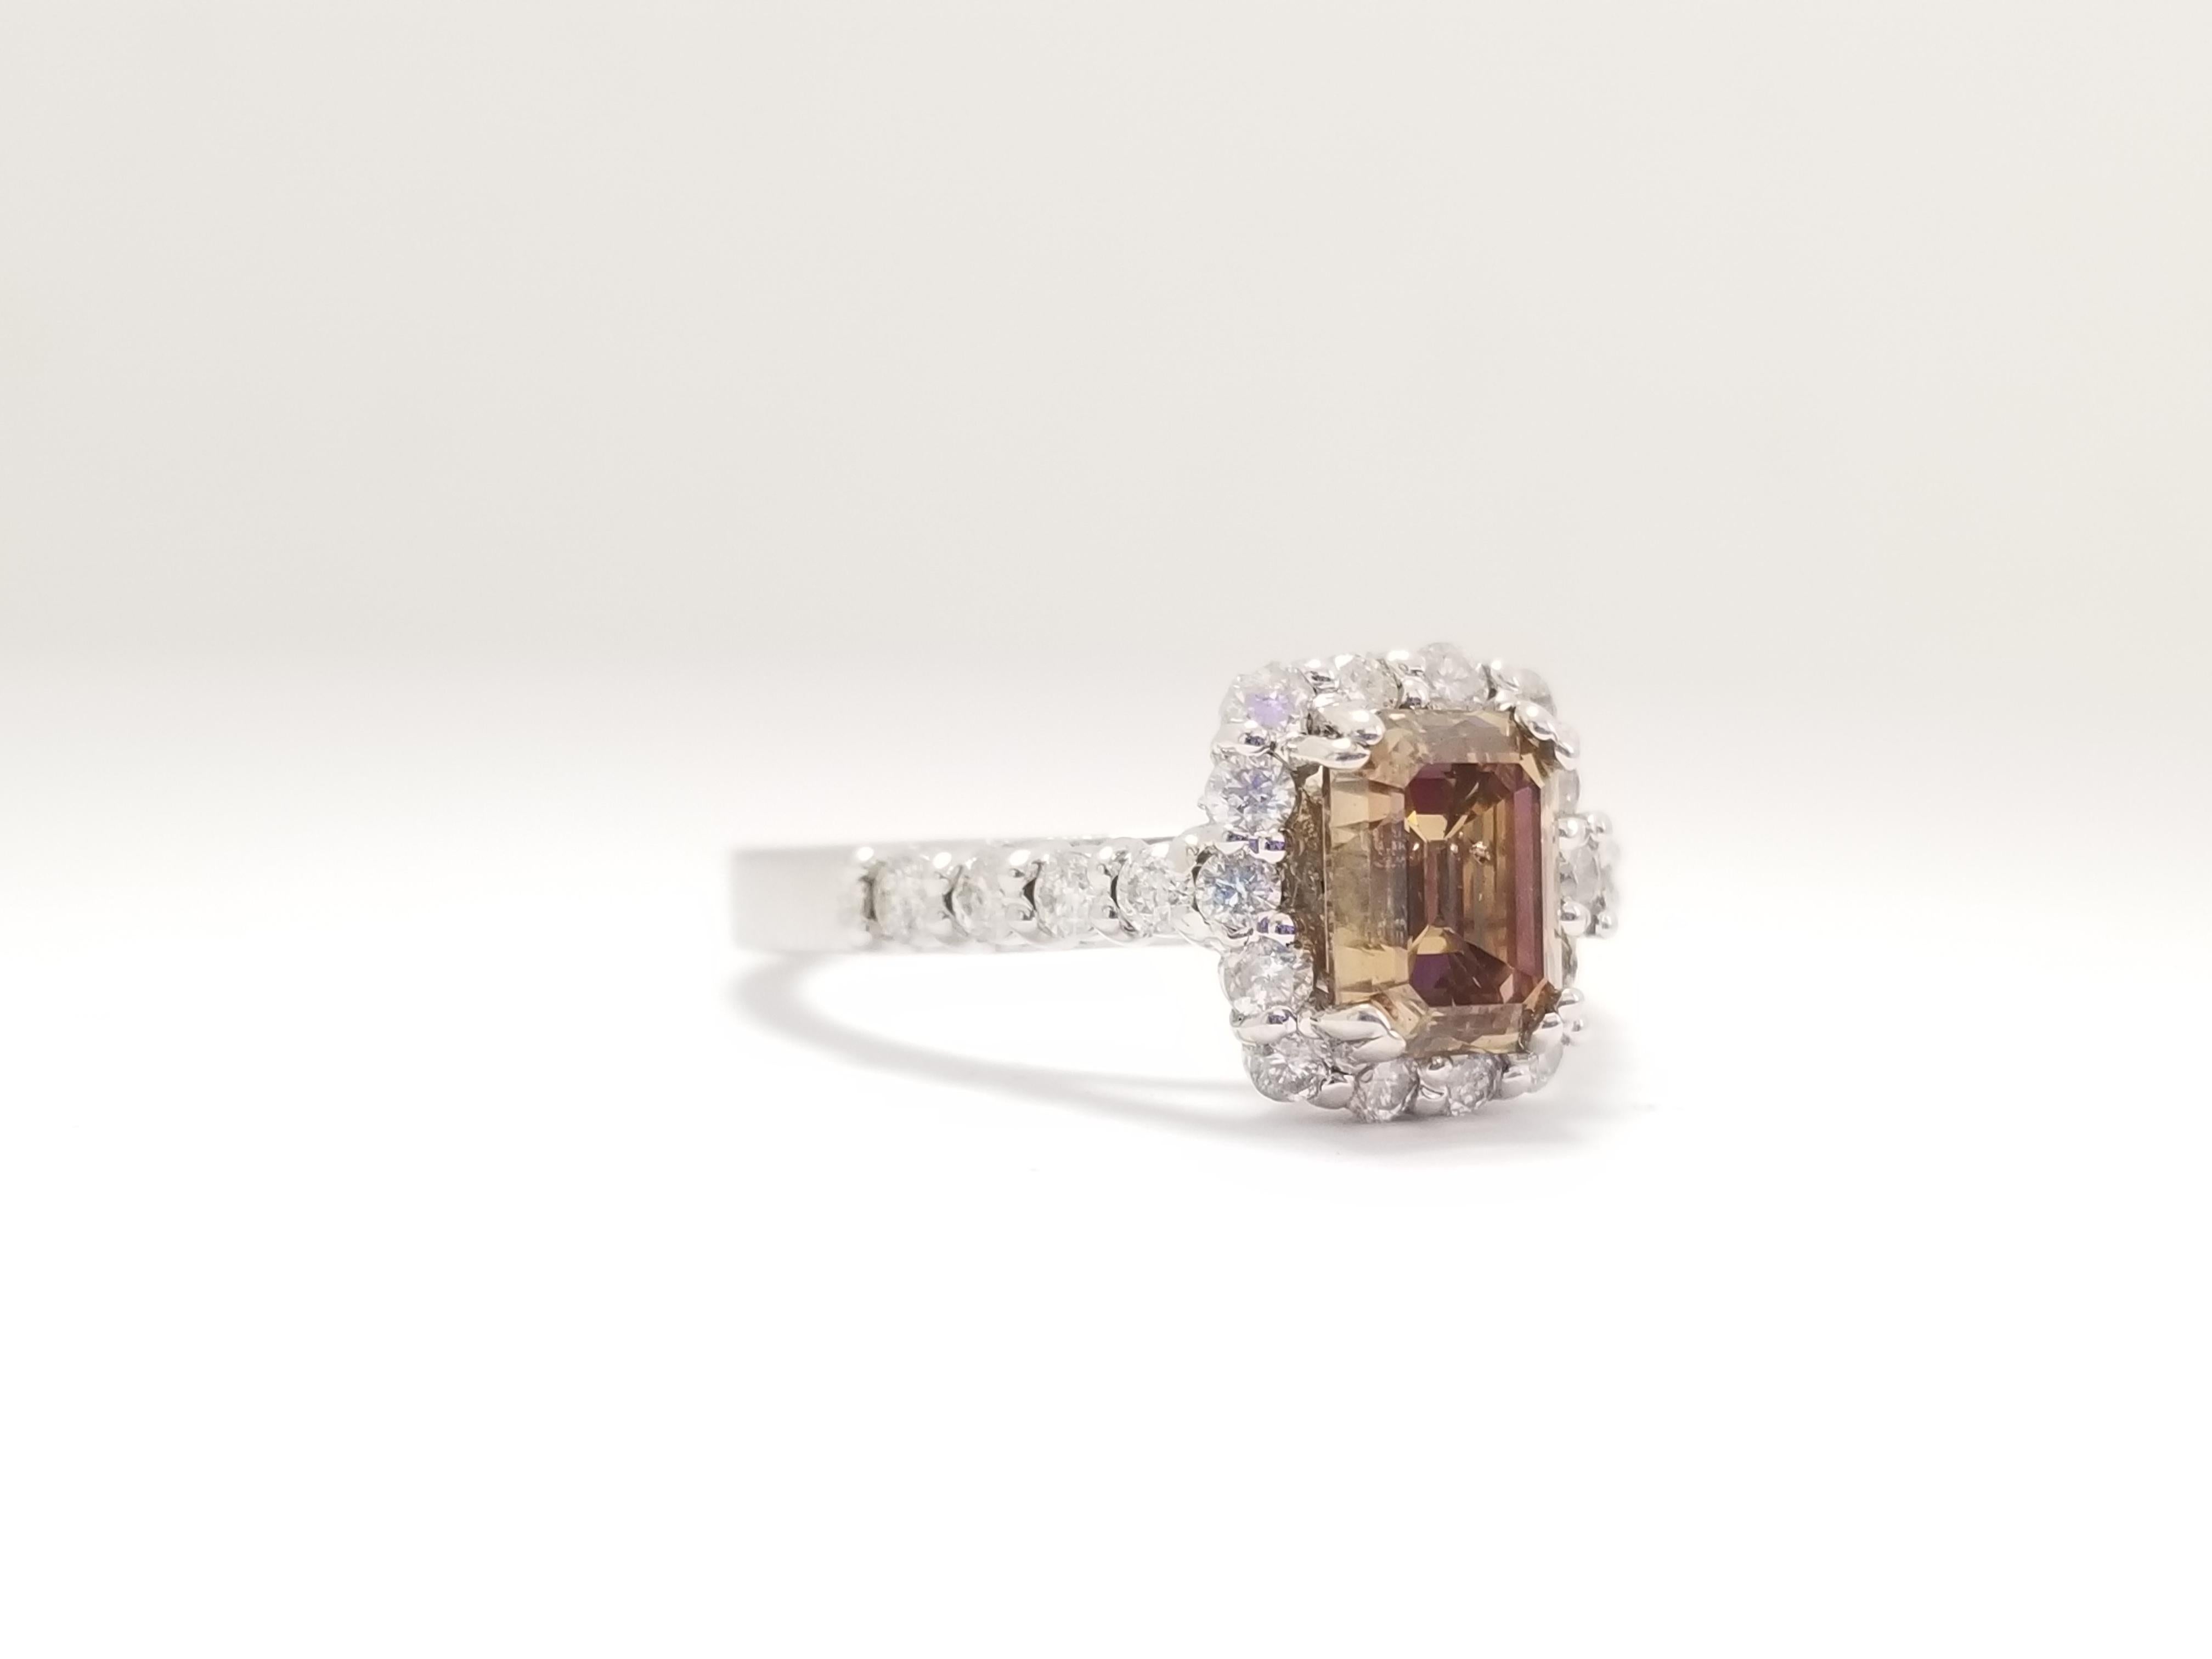 GIA Natural Fancy Yellow-Brown Emerald Cut Diamond Ring Weighing 1.33 carats. 
Ring Size: 6.5